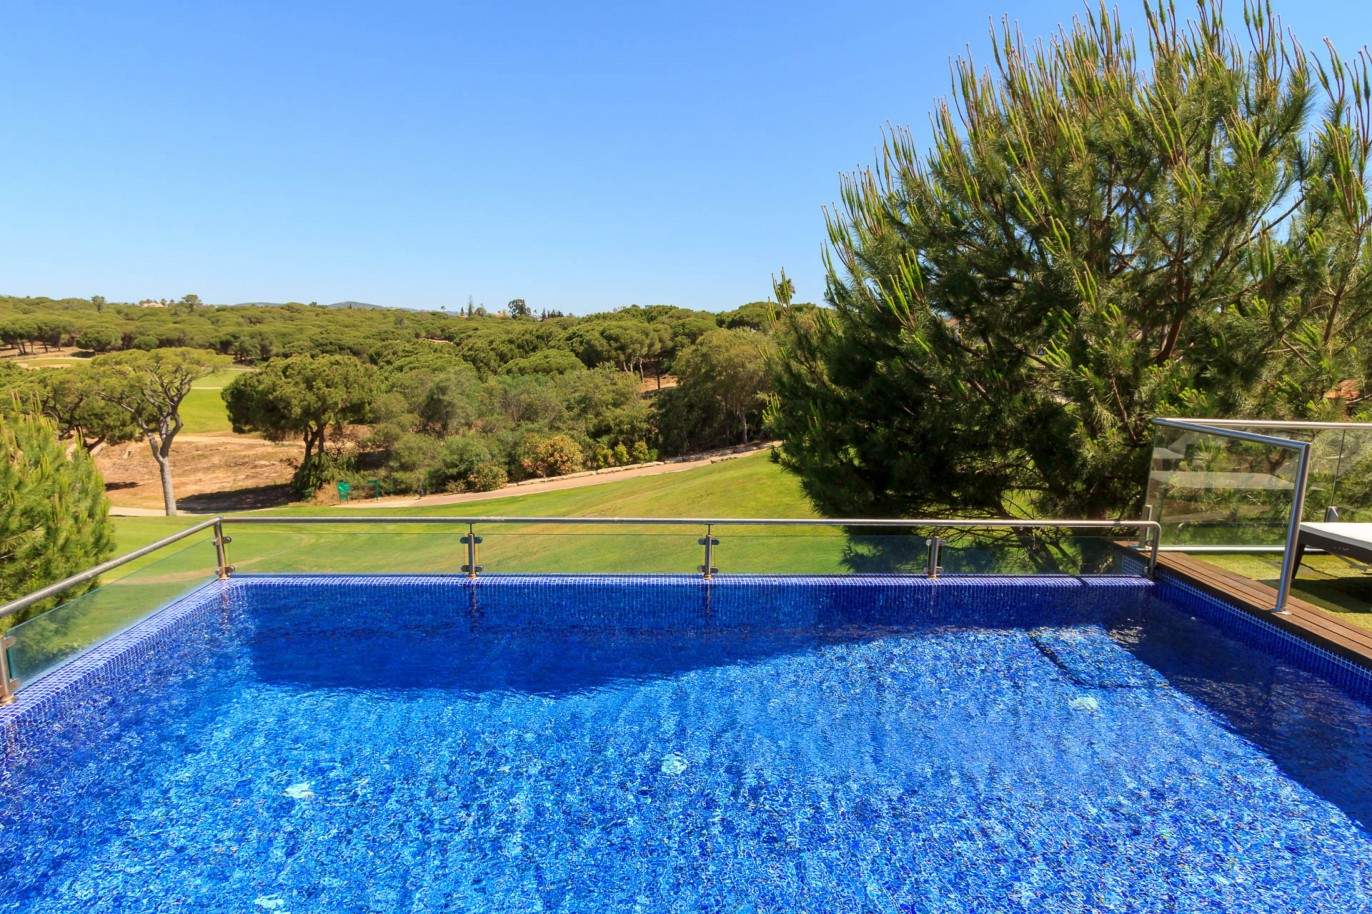 2 bedroom apartment with pool, for sale in Vale do Lobo, Algarve_207390